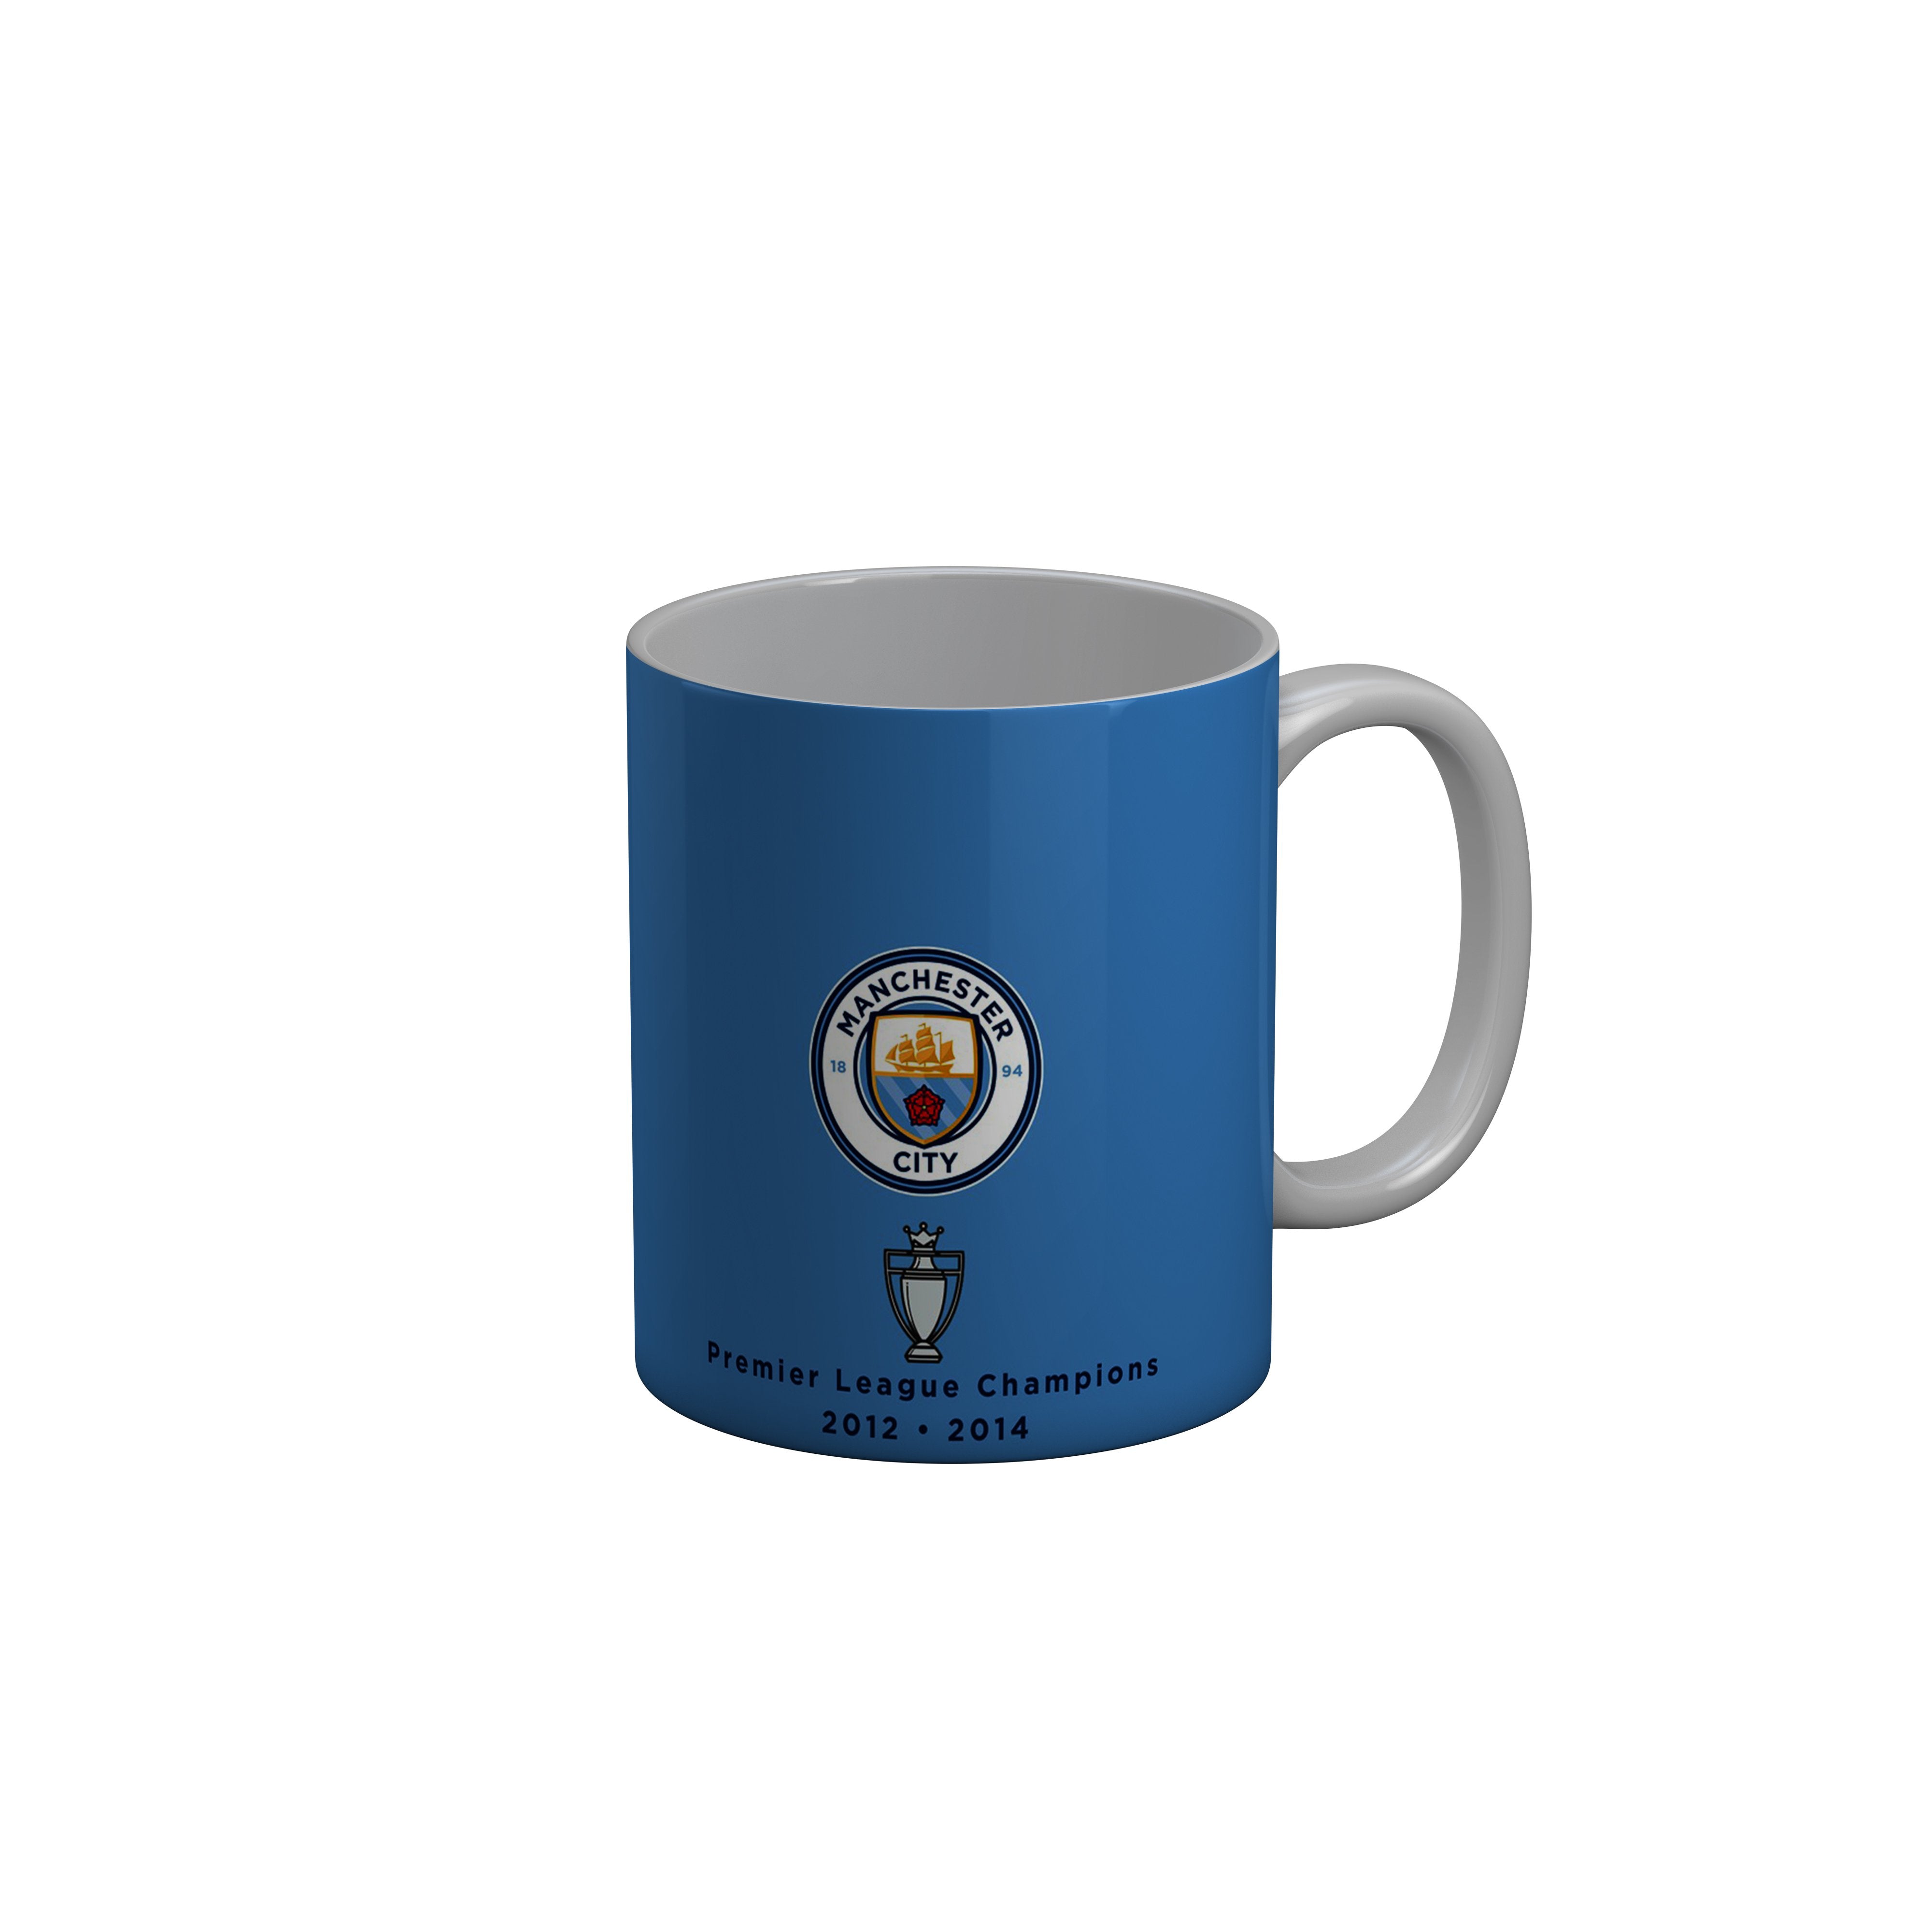 FashionRazor Manchester City Football Premier League Champions 2012-2014 Blue Ceramic Coffee Mug